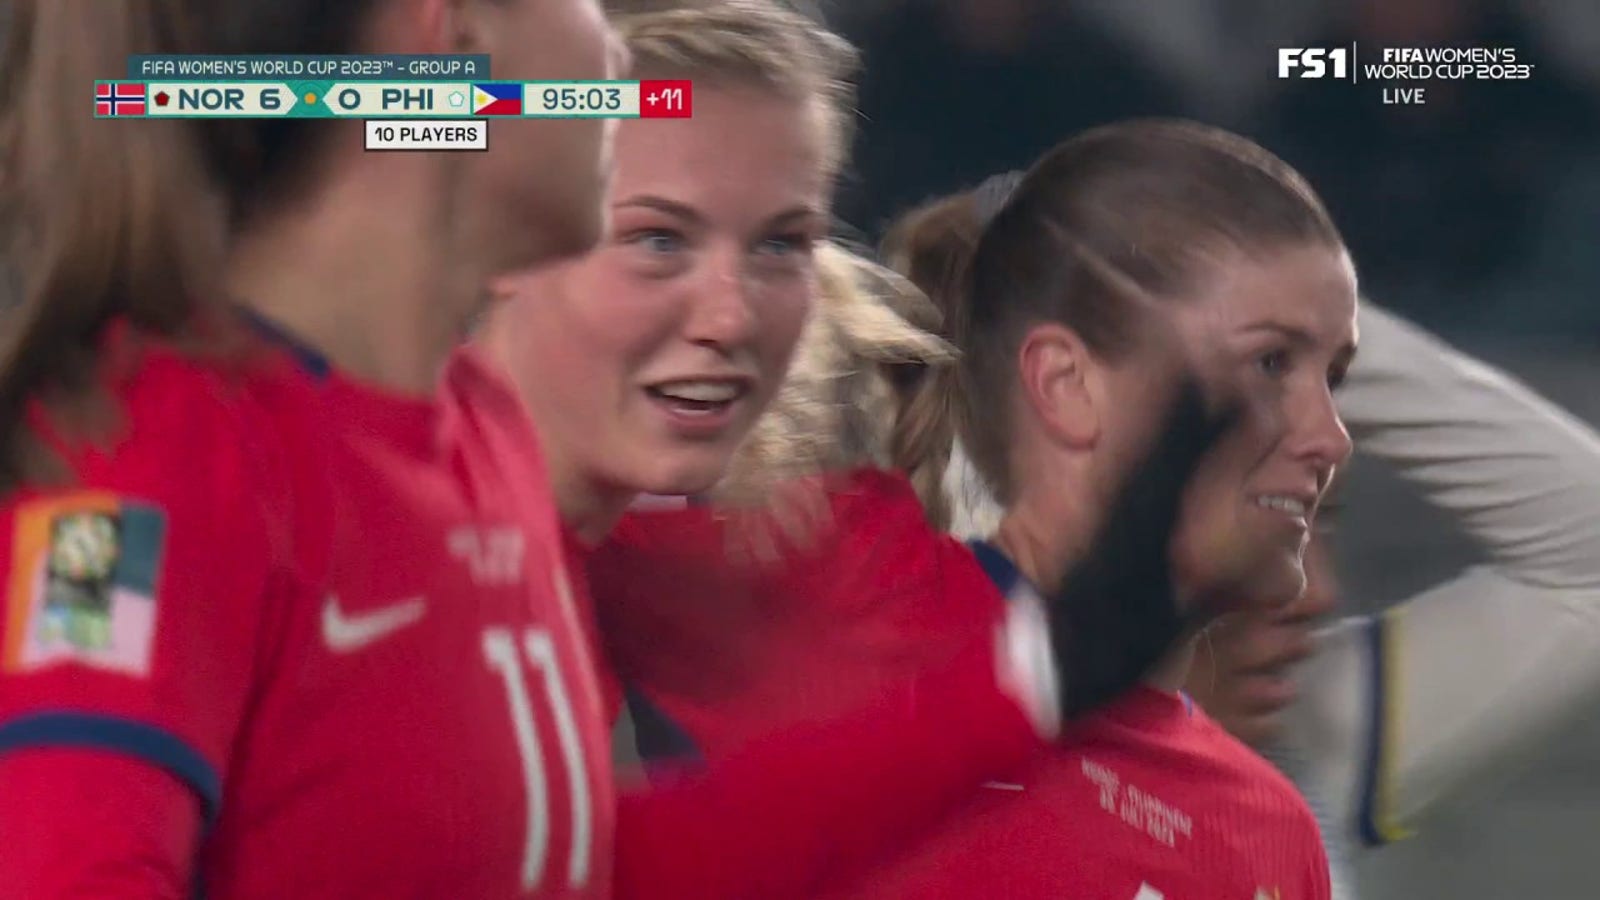 Norway's Sophie Roman Haug scores goal vs. Philippines in 90+5' | 2023 FIFA Women's World Cup